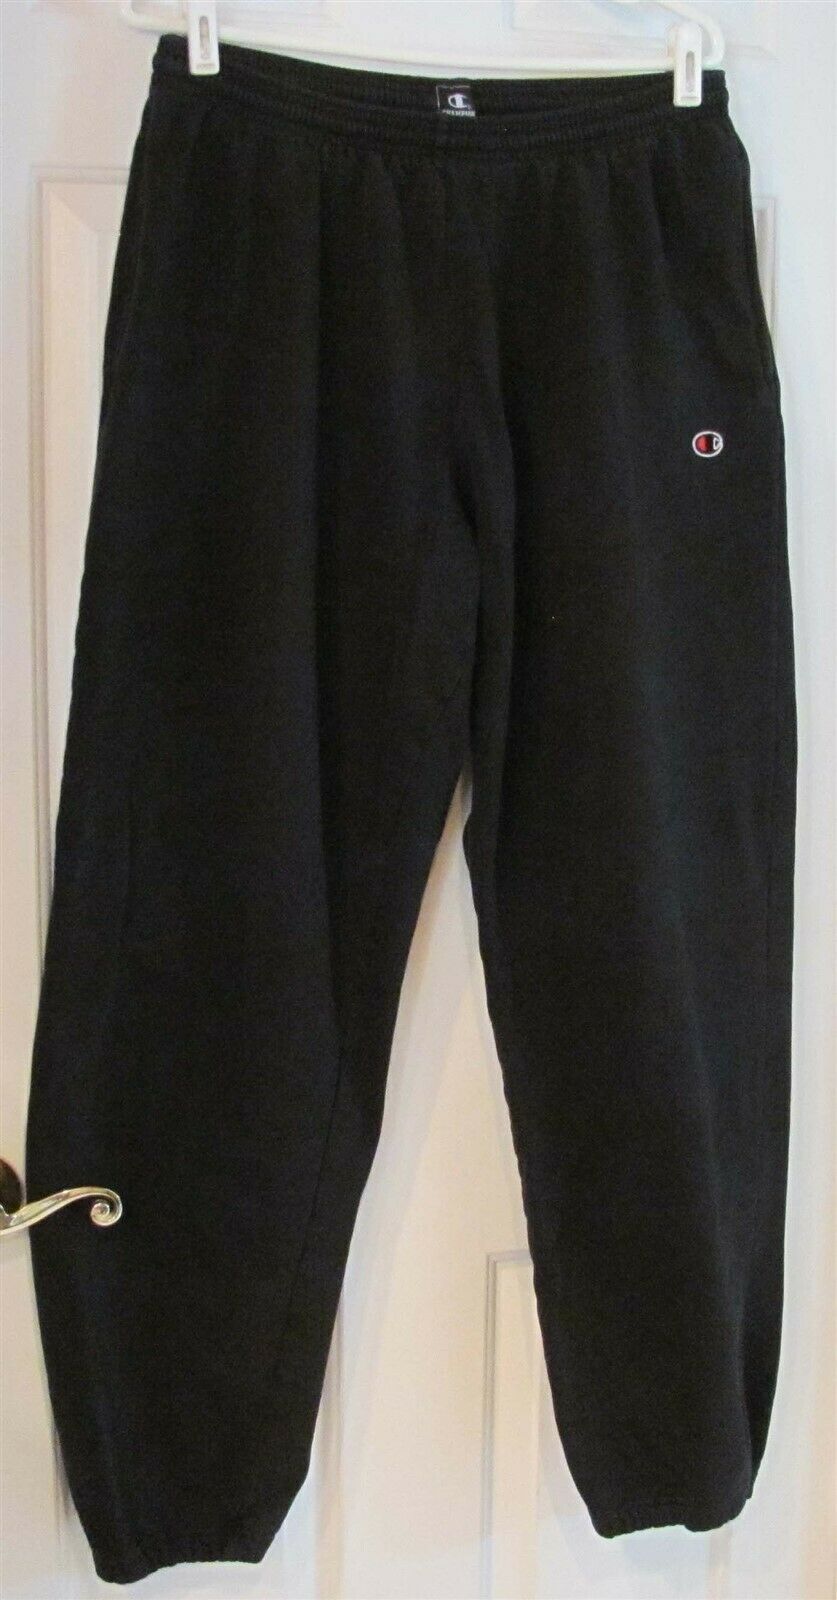 Vintage Champion Jogging Suit Warmup Pants Extra Large (black) Used